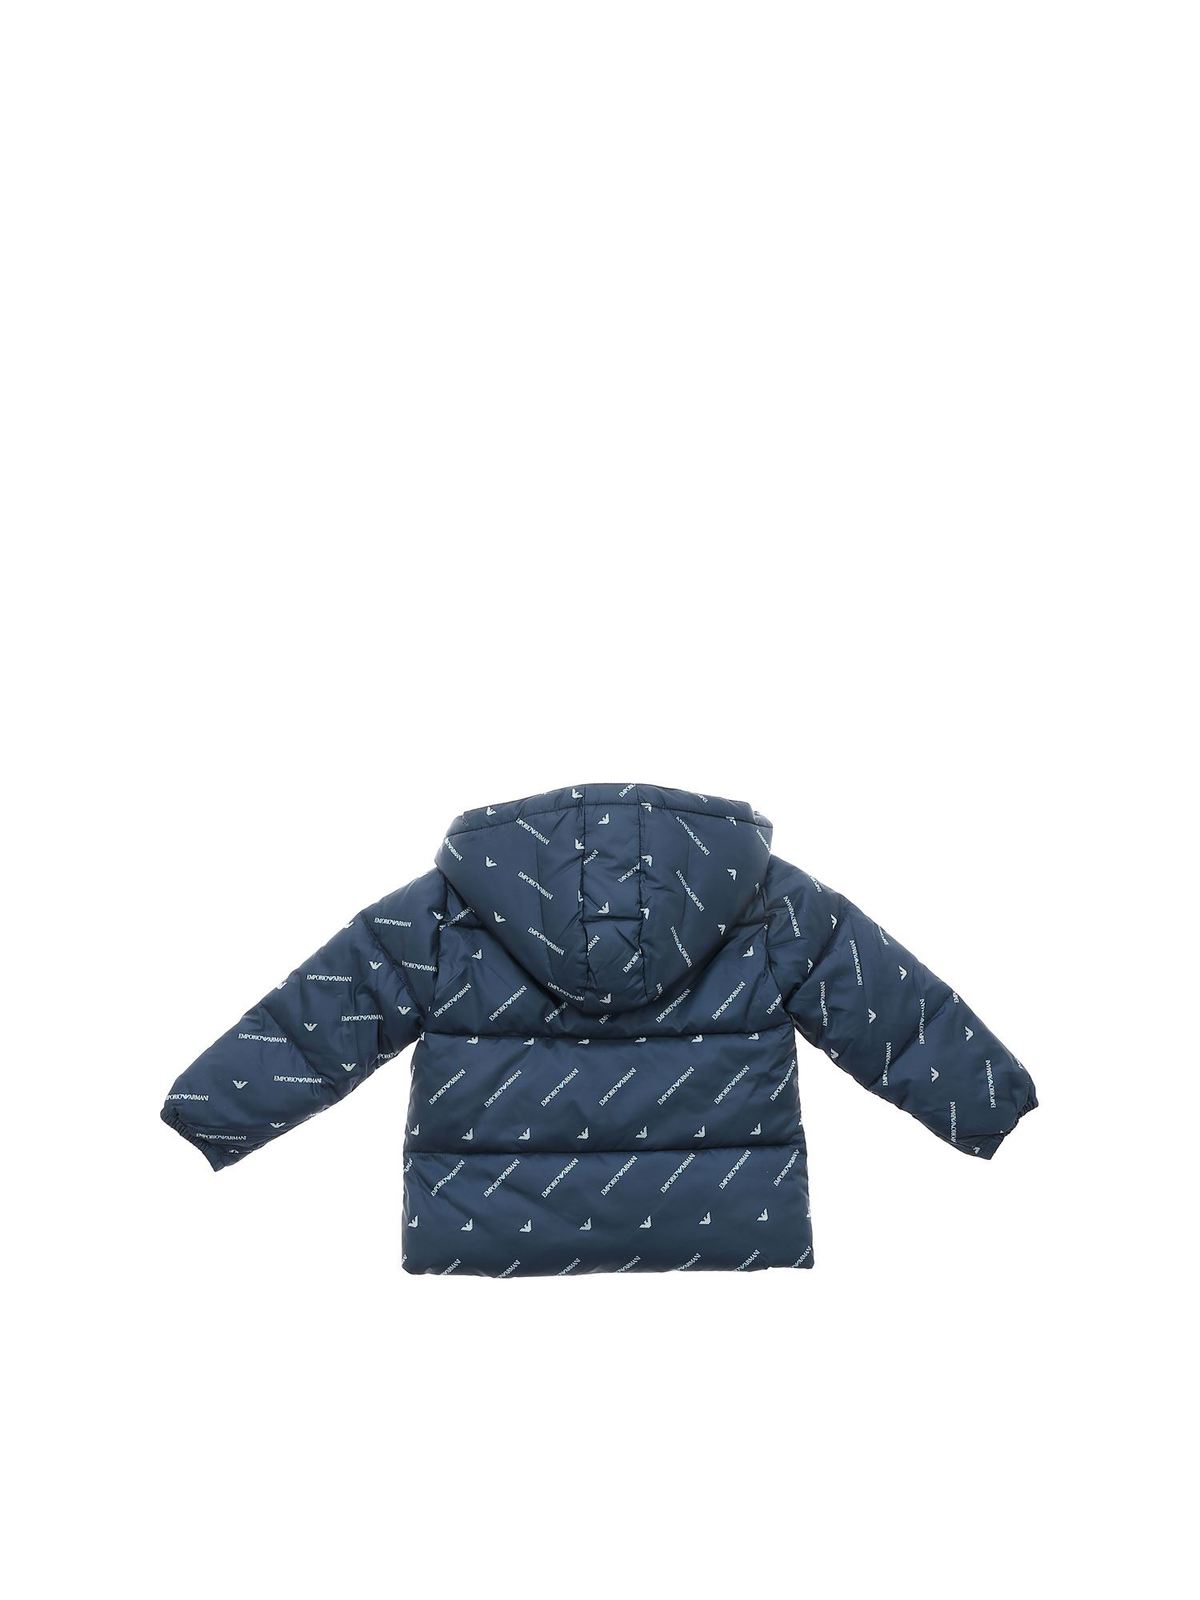 armani blue coat